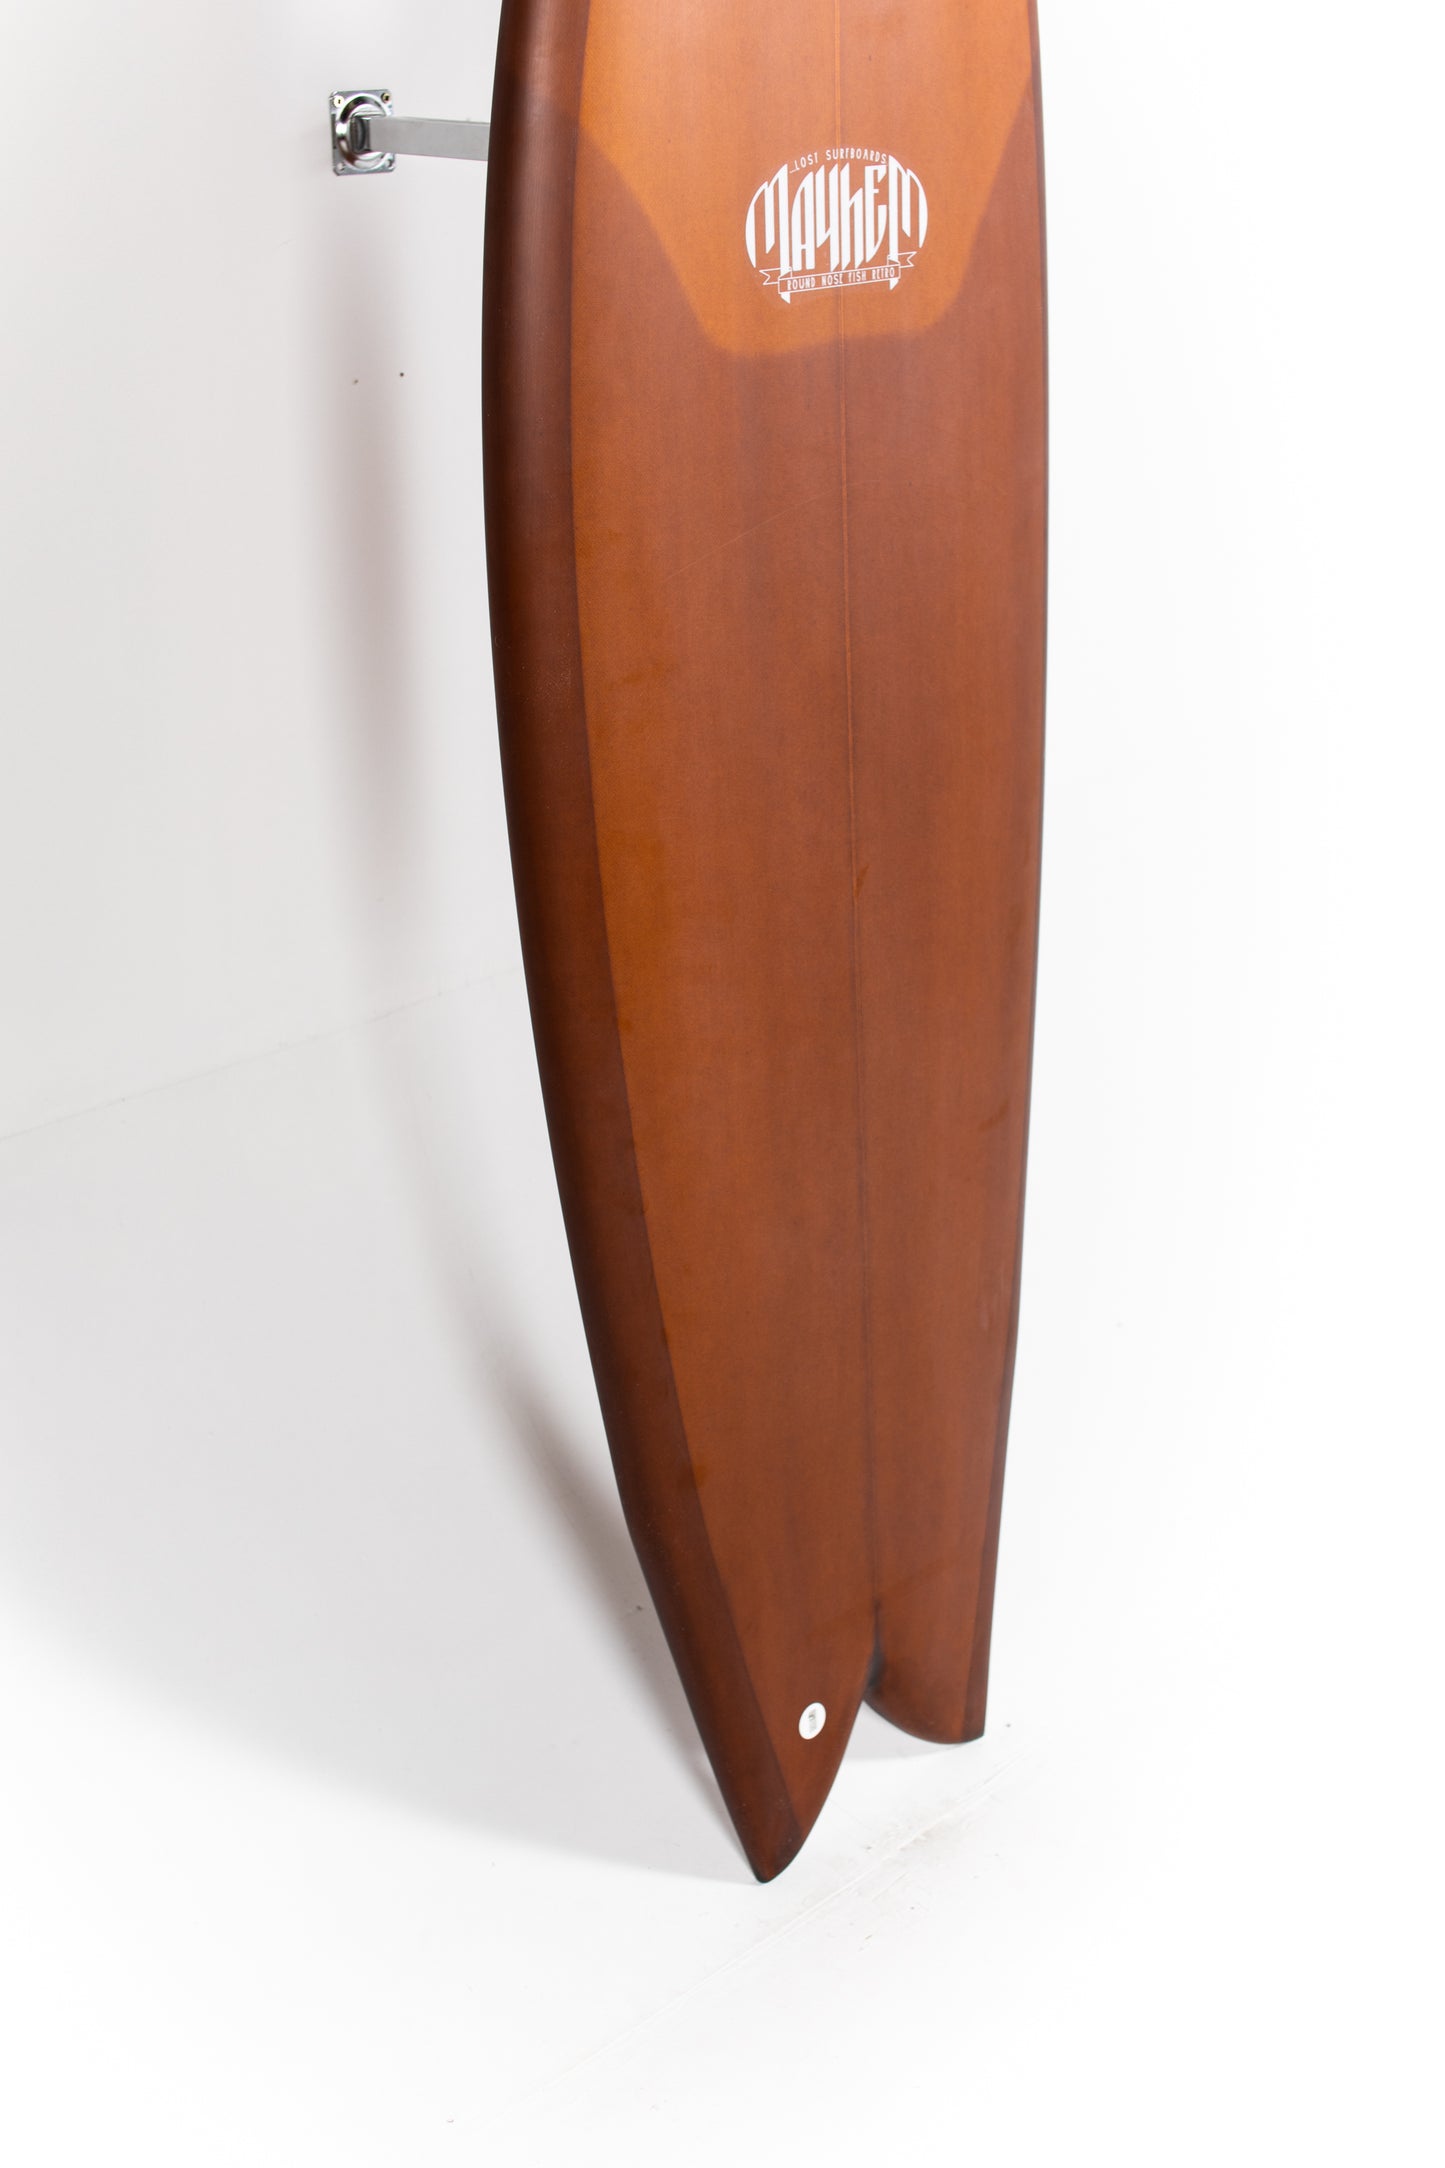 
                  
                    Pukas Surf Shop - Lost Surfboard - RNF RETRO'23 REVAMP by Mayhem - 5’10” x 21.5" x 2.52" - 37L - MH17233
                  
                